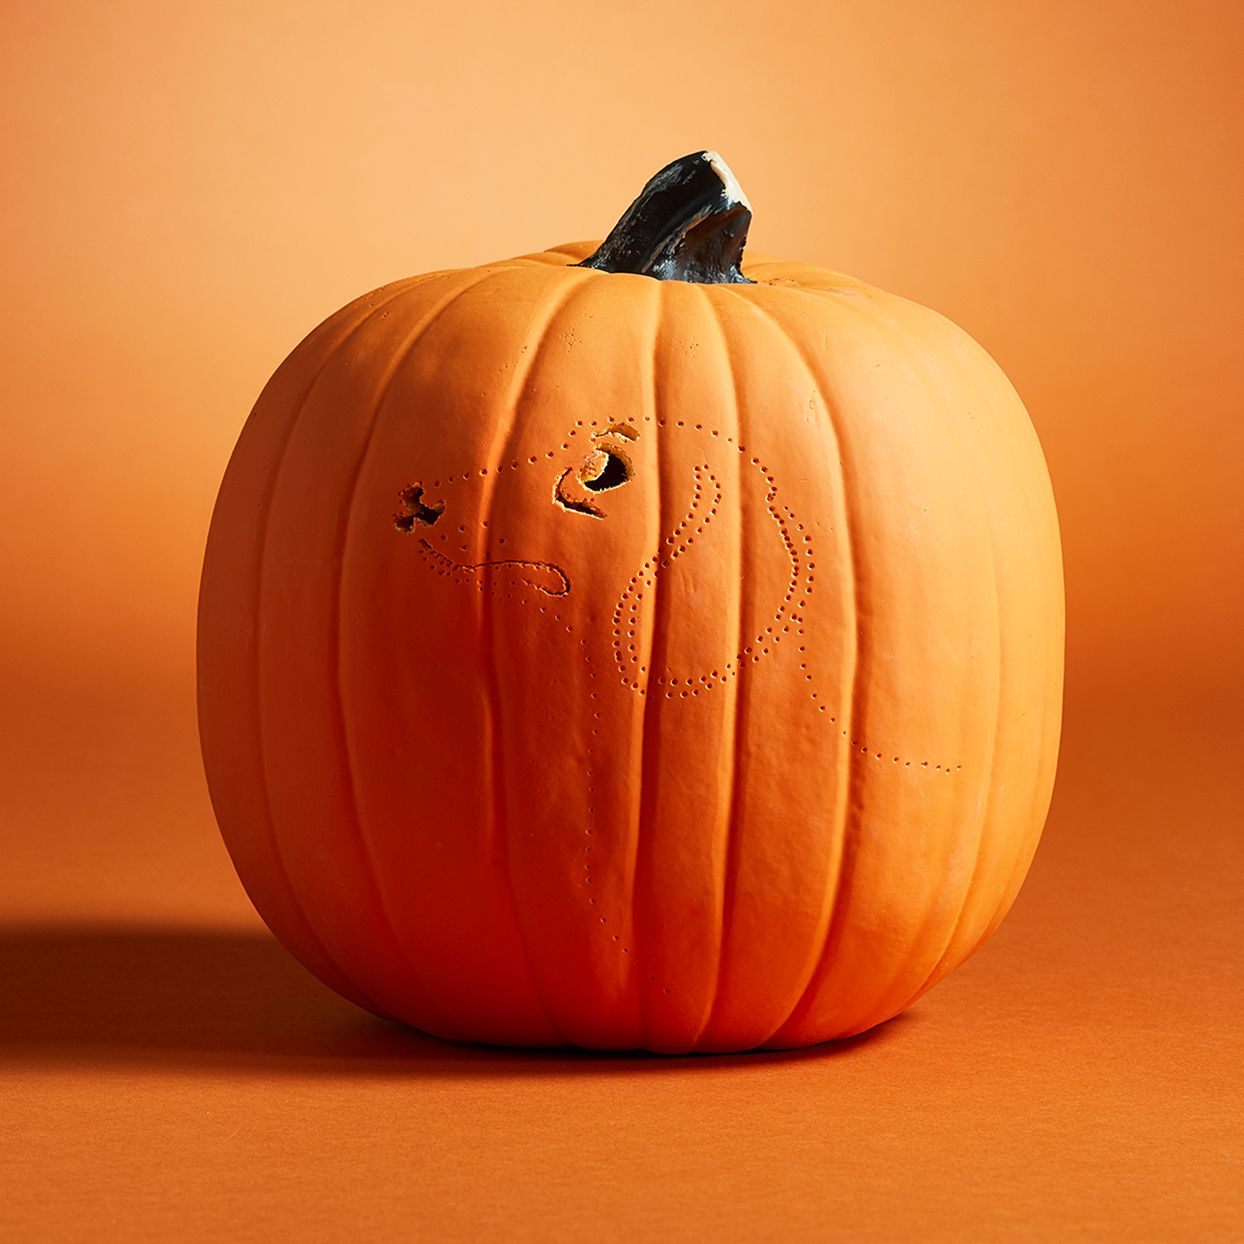 Dachshund pumpkin carving partially complete pumpkin on an orange background